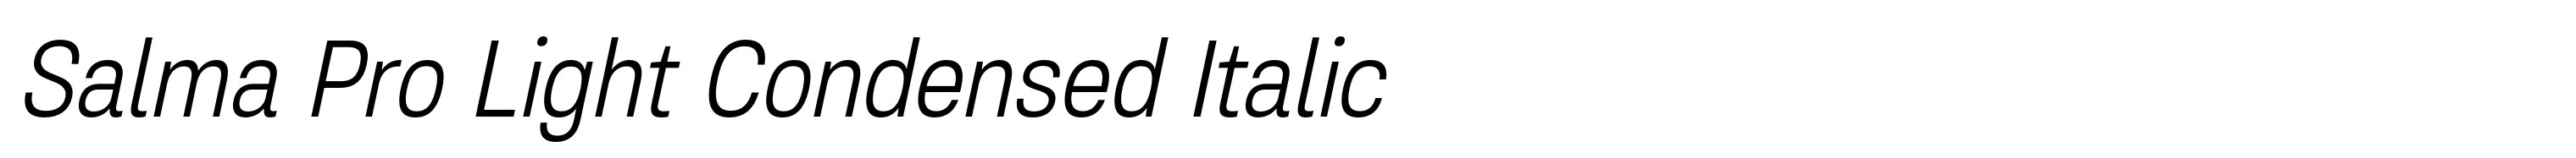 Salma Pro Light Condensed Italic